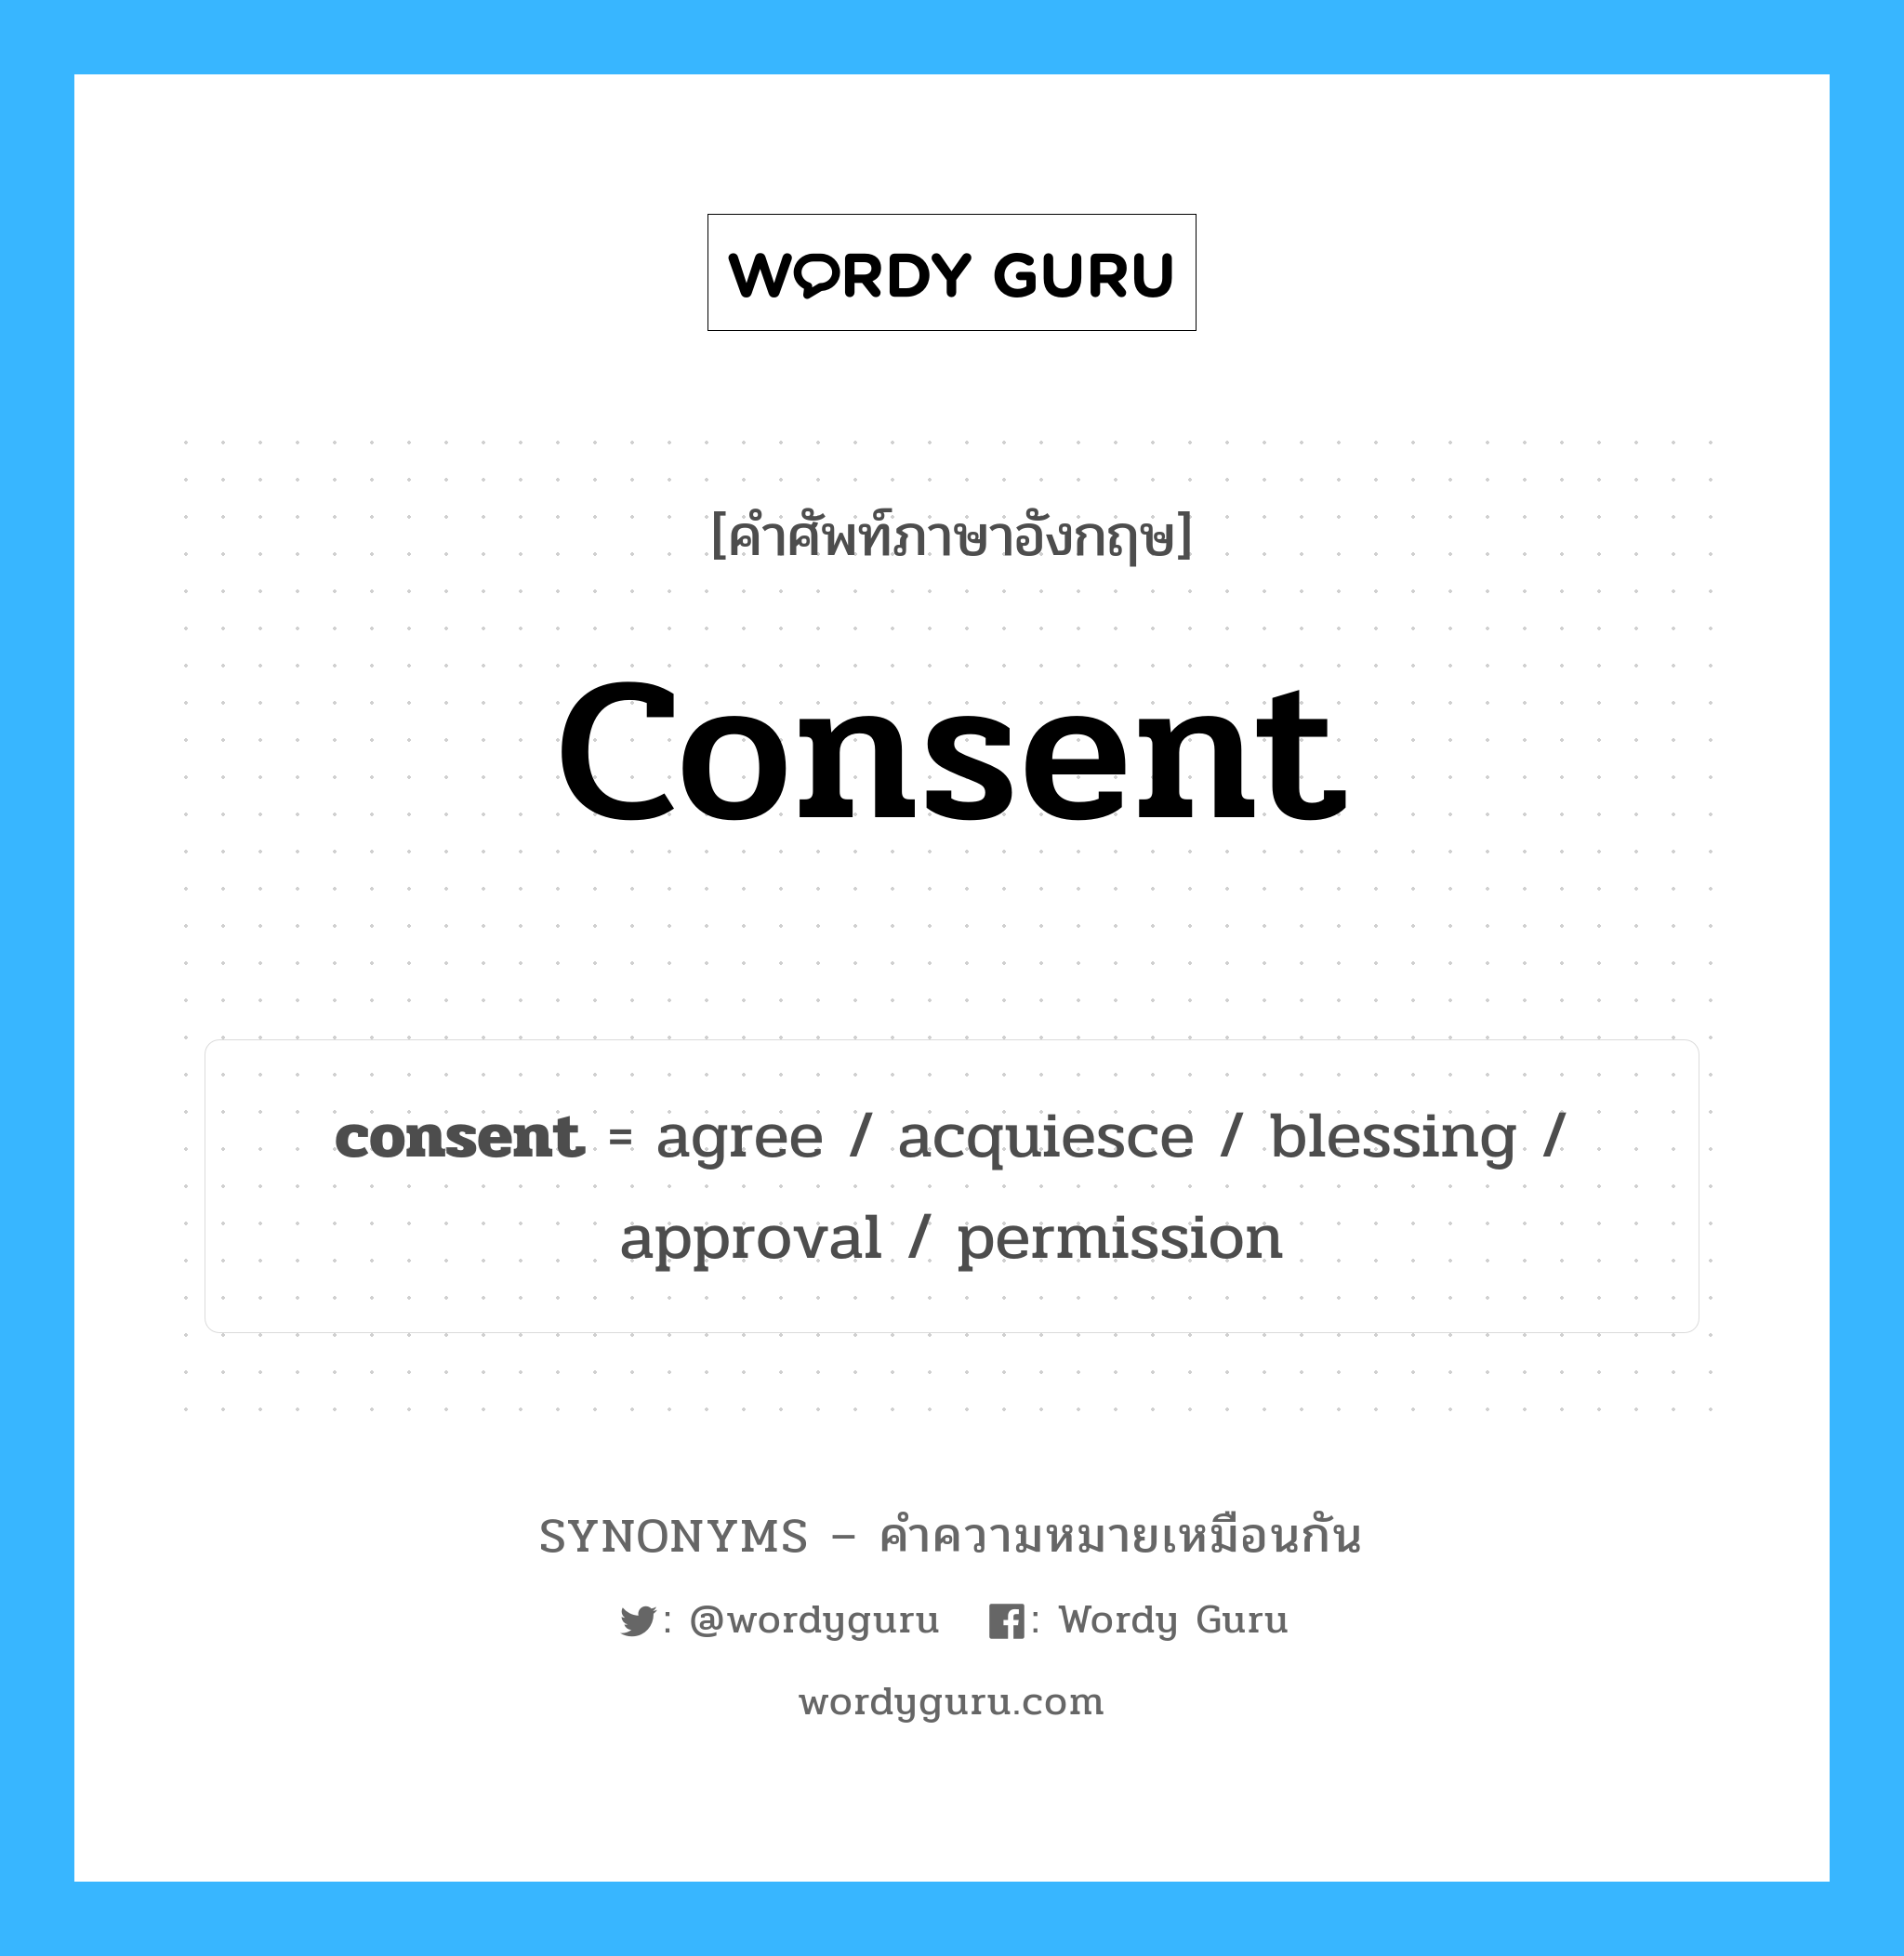 approval เป็นหนึ่งใน consent และมีคำอื่น ๆ อีกดังนี้, คำศัพท์ภาษาอังกฤษ approval ความหมายคล้ายกันกับ consent แปลว่า การอนุมัติ หมวด consent